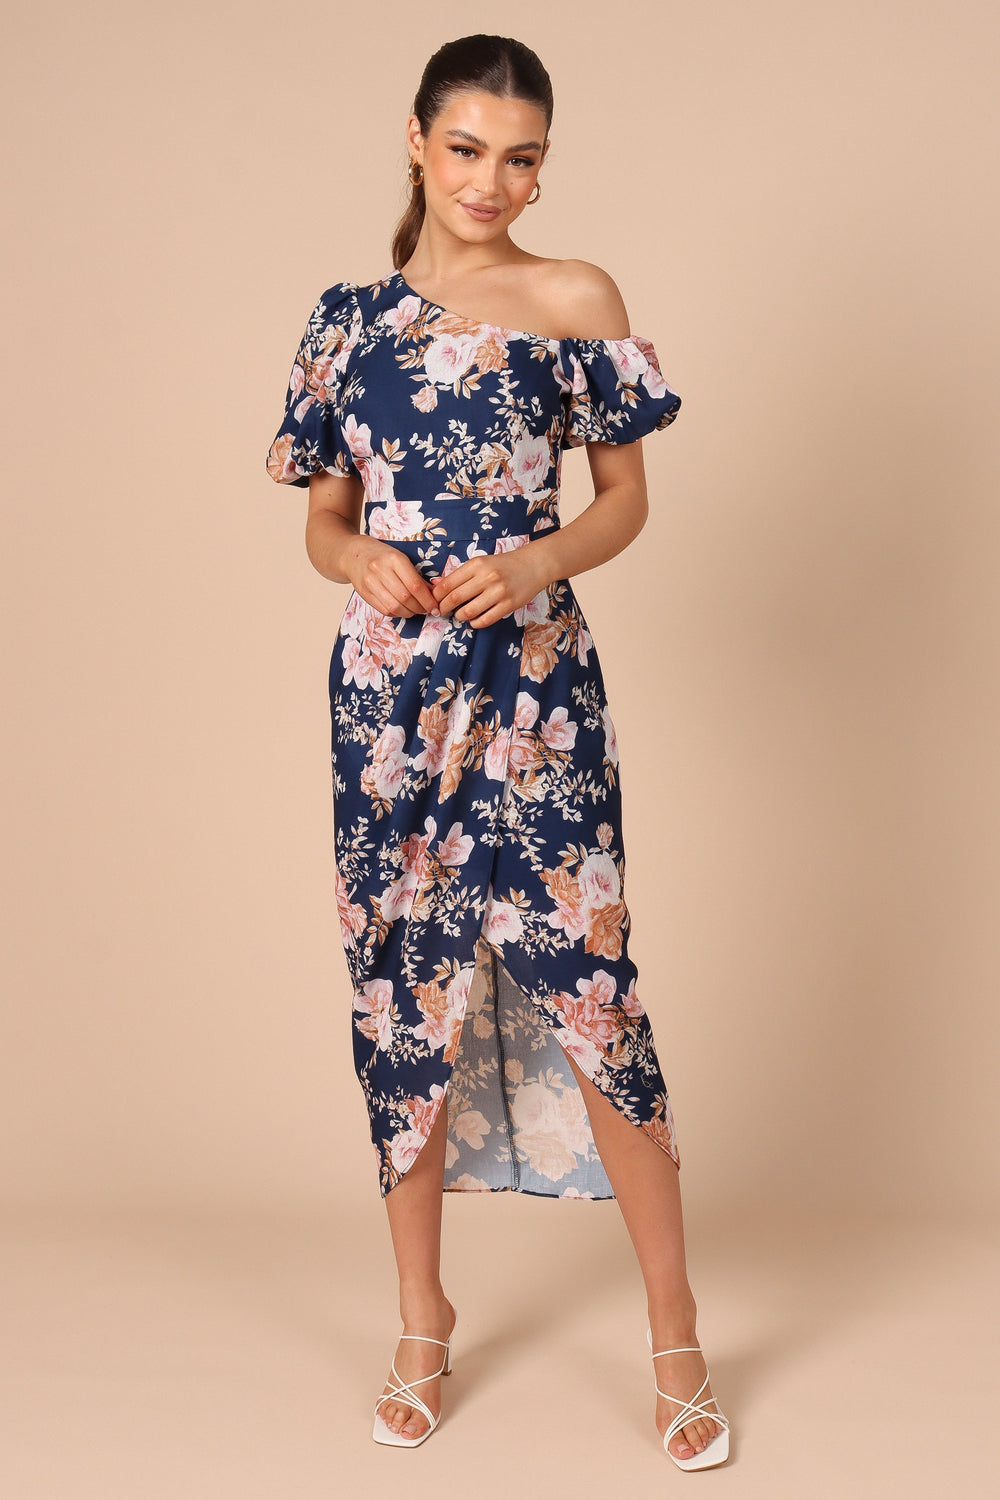 Cleobella One Shoulder Midi Dress - Navy Floral - Petal & Pup USA